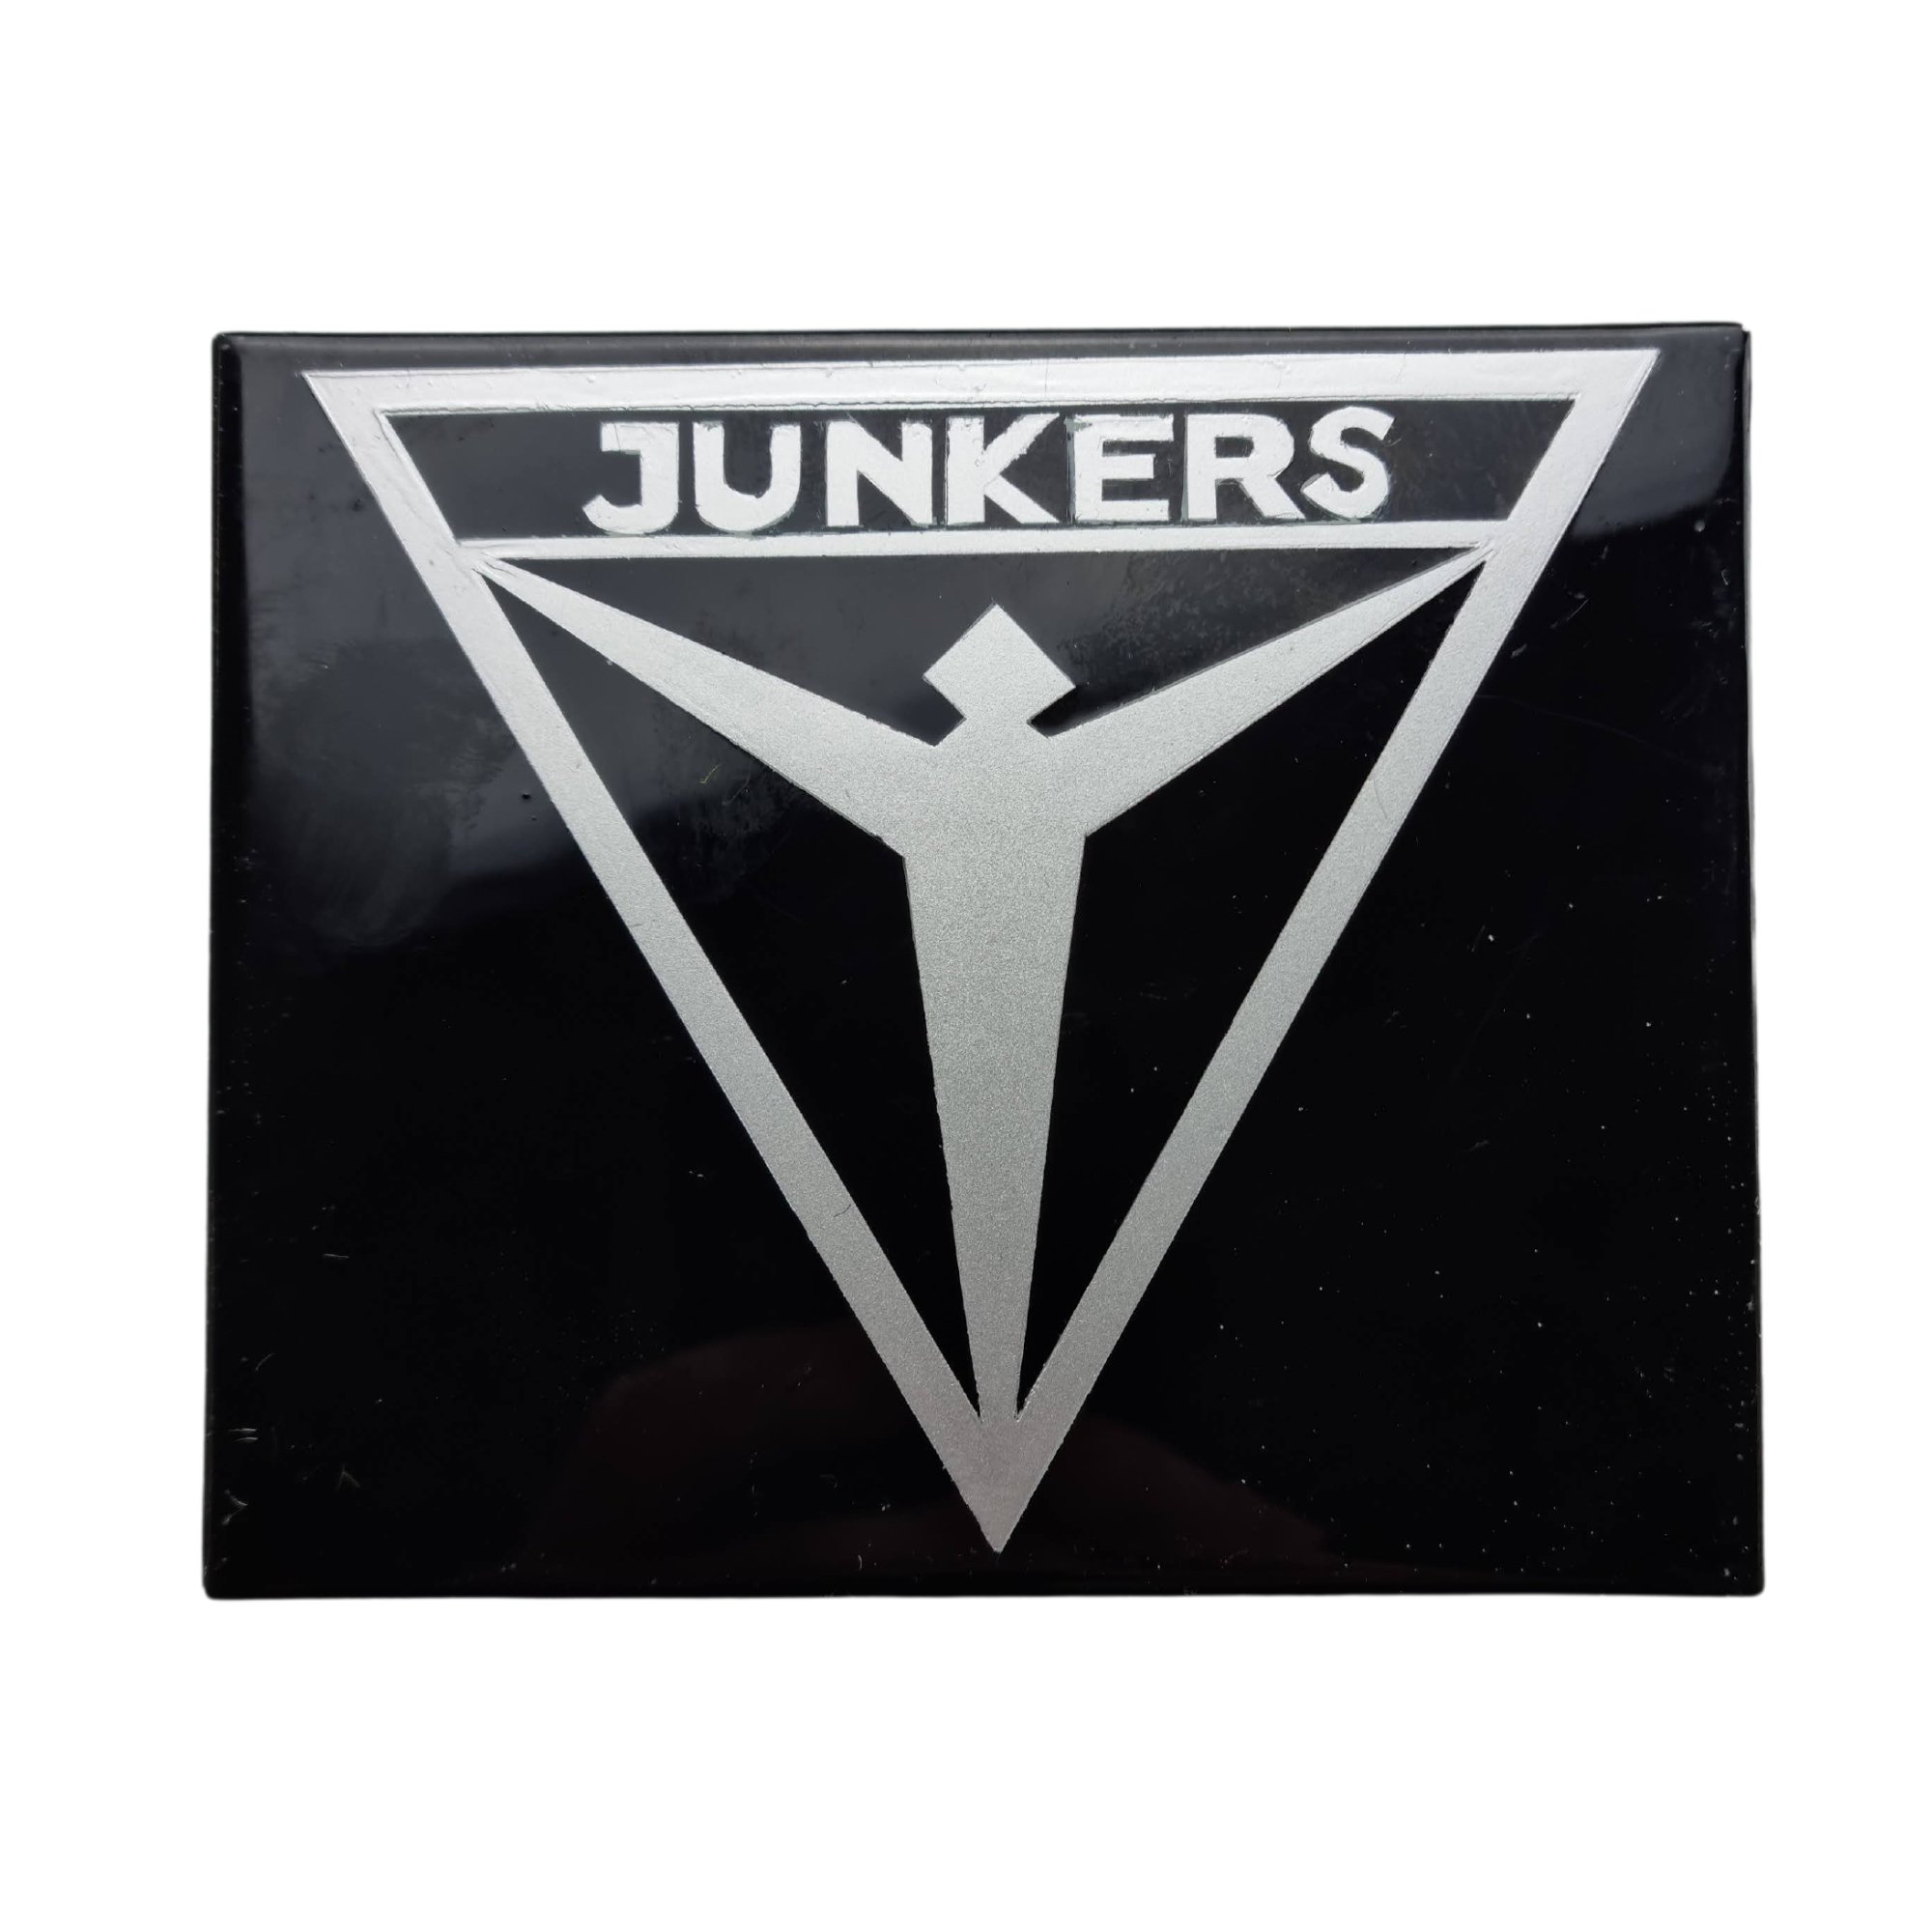 Junkers-Emblem (Deutsches Straßenmuseum e.V. CC BY-NC-SA)